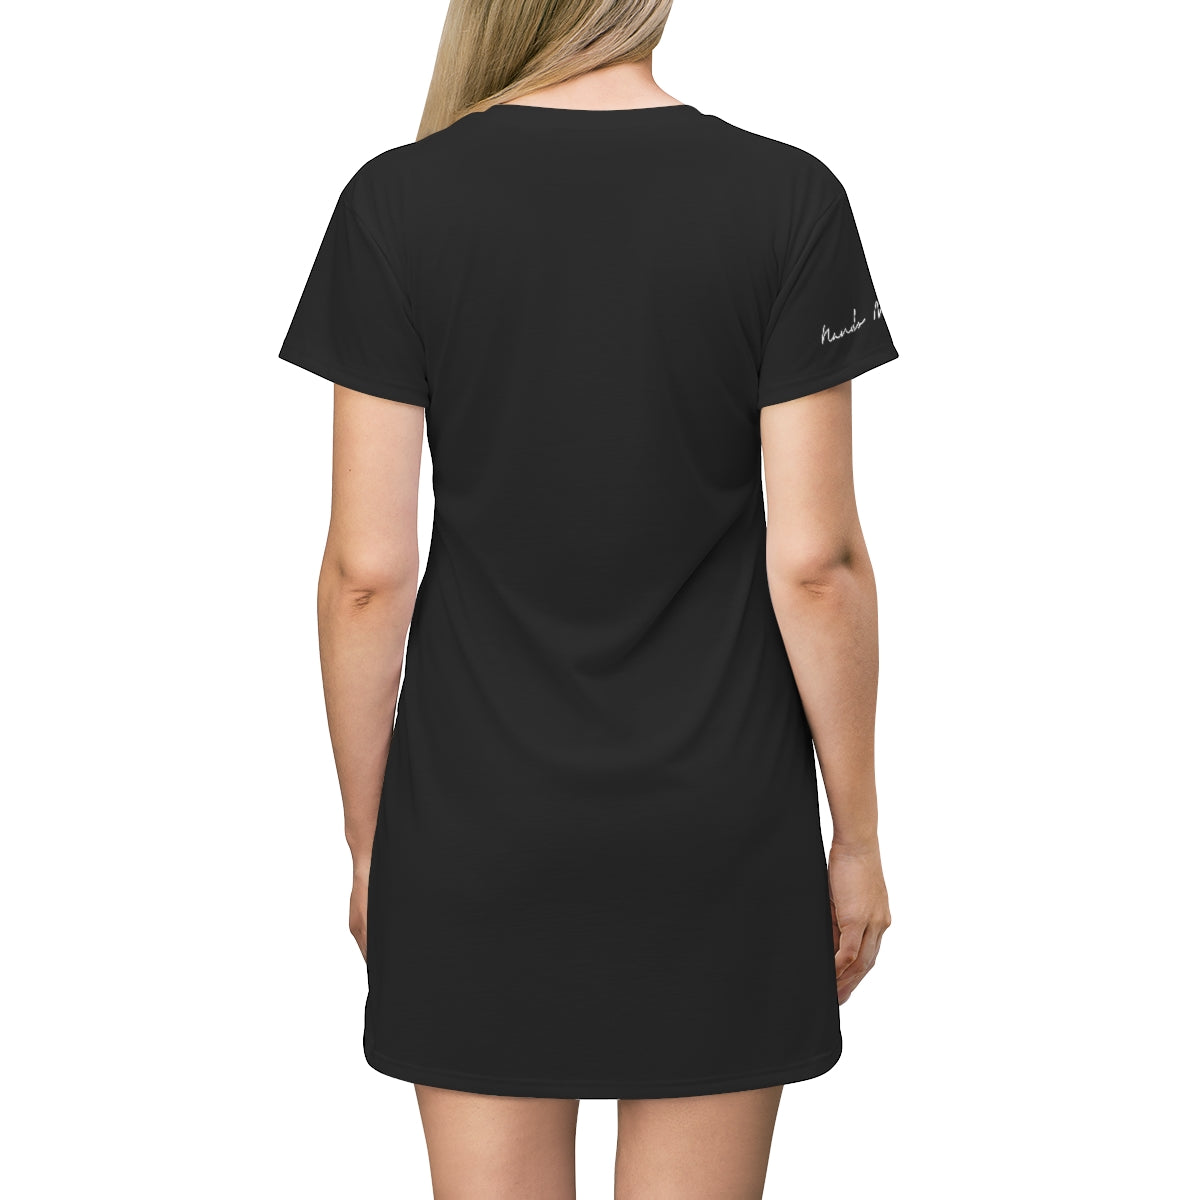 Shirtdress, Black Calla Lilly Motive